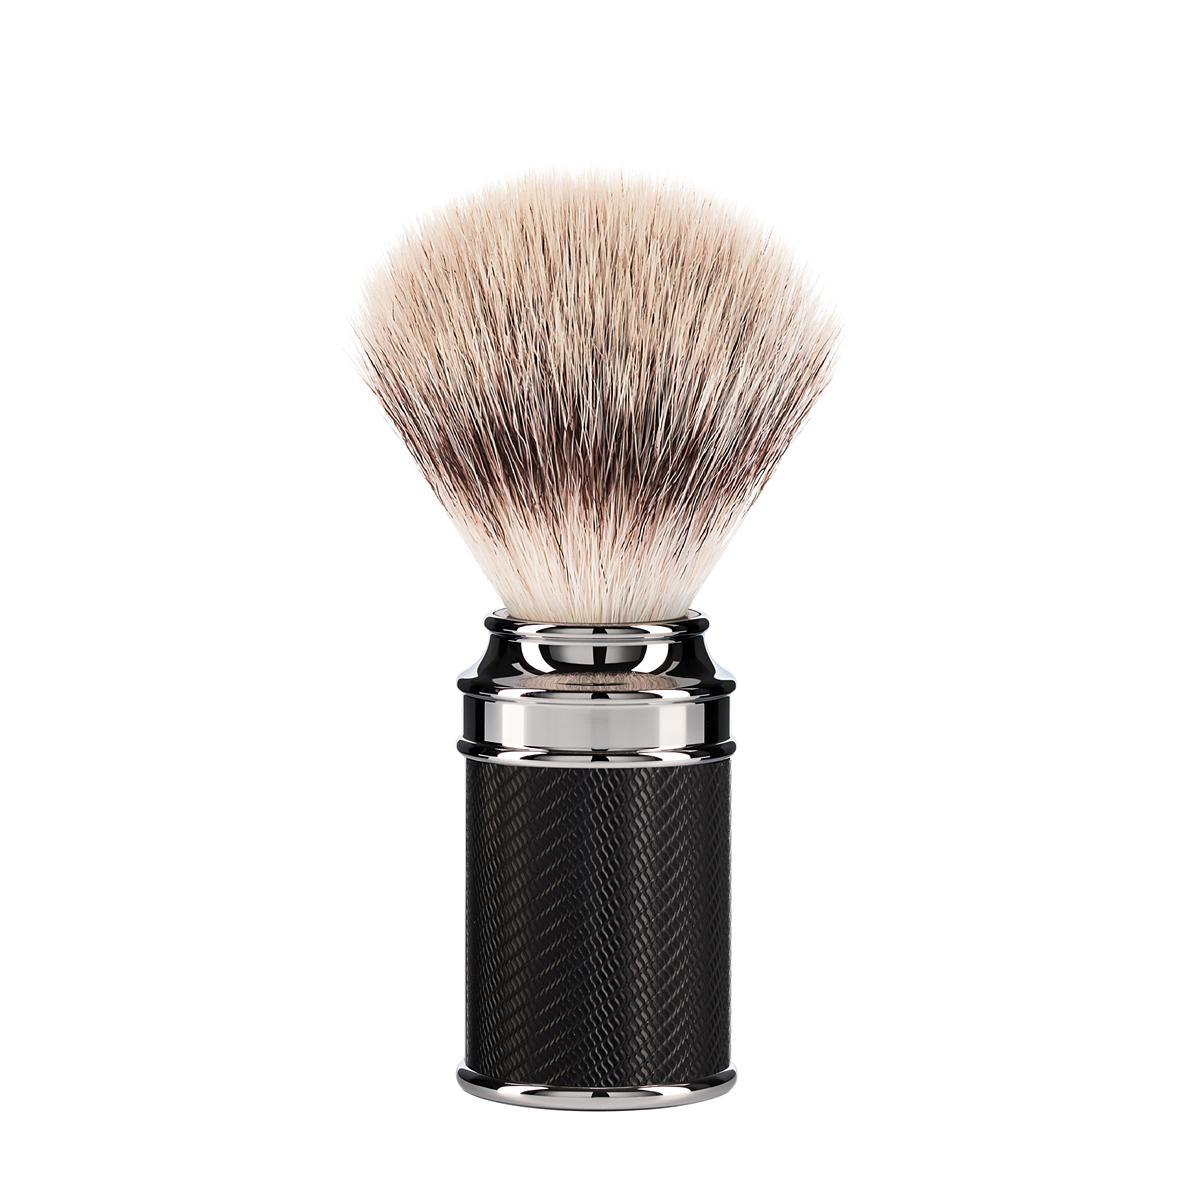 MUHLE silvertip fibre (Synthetic) shaving brush